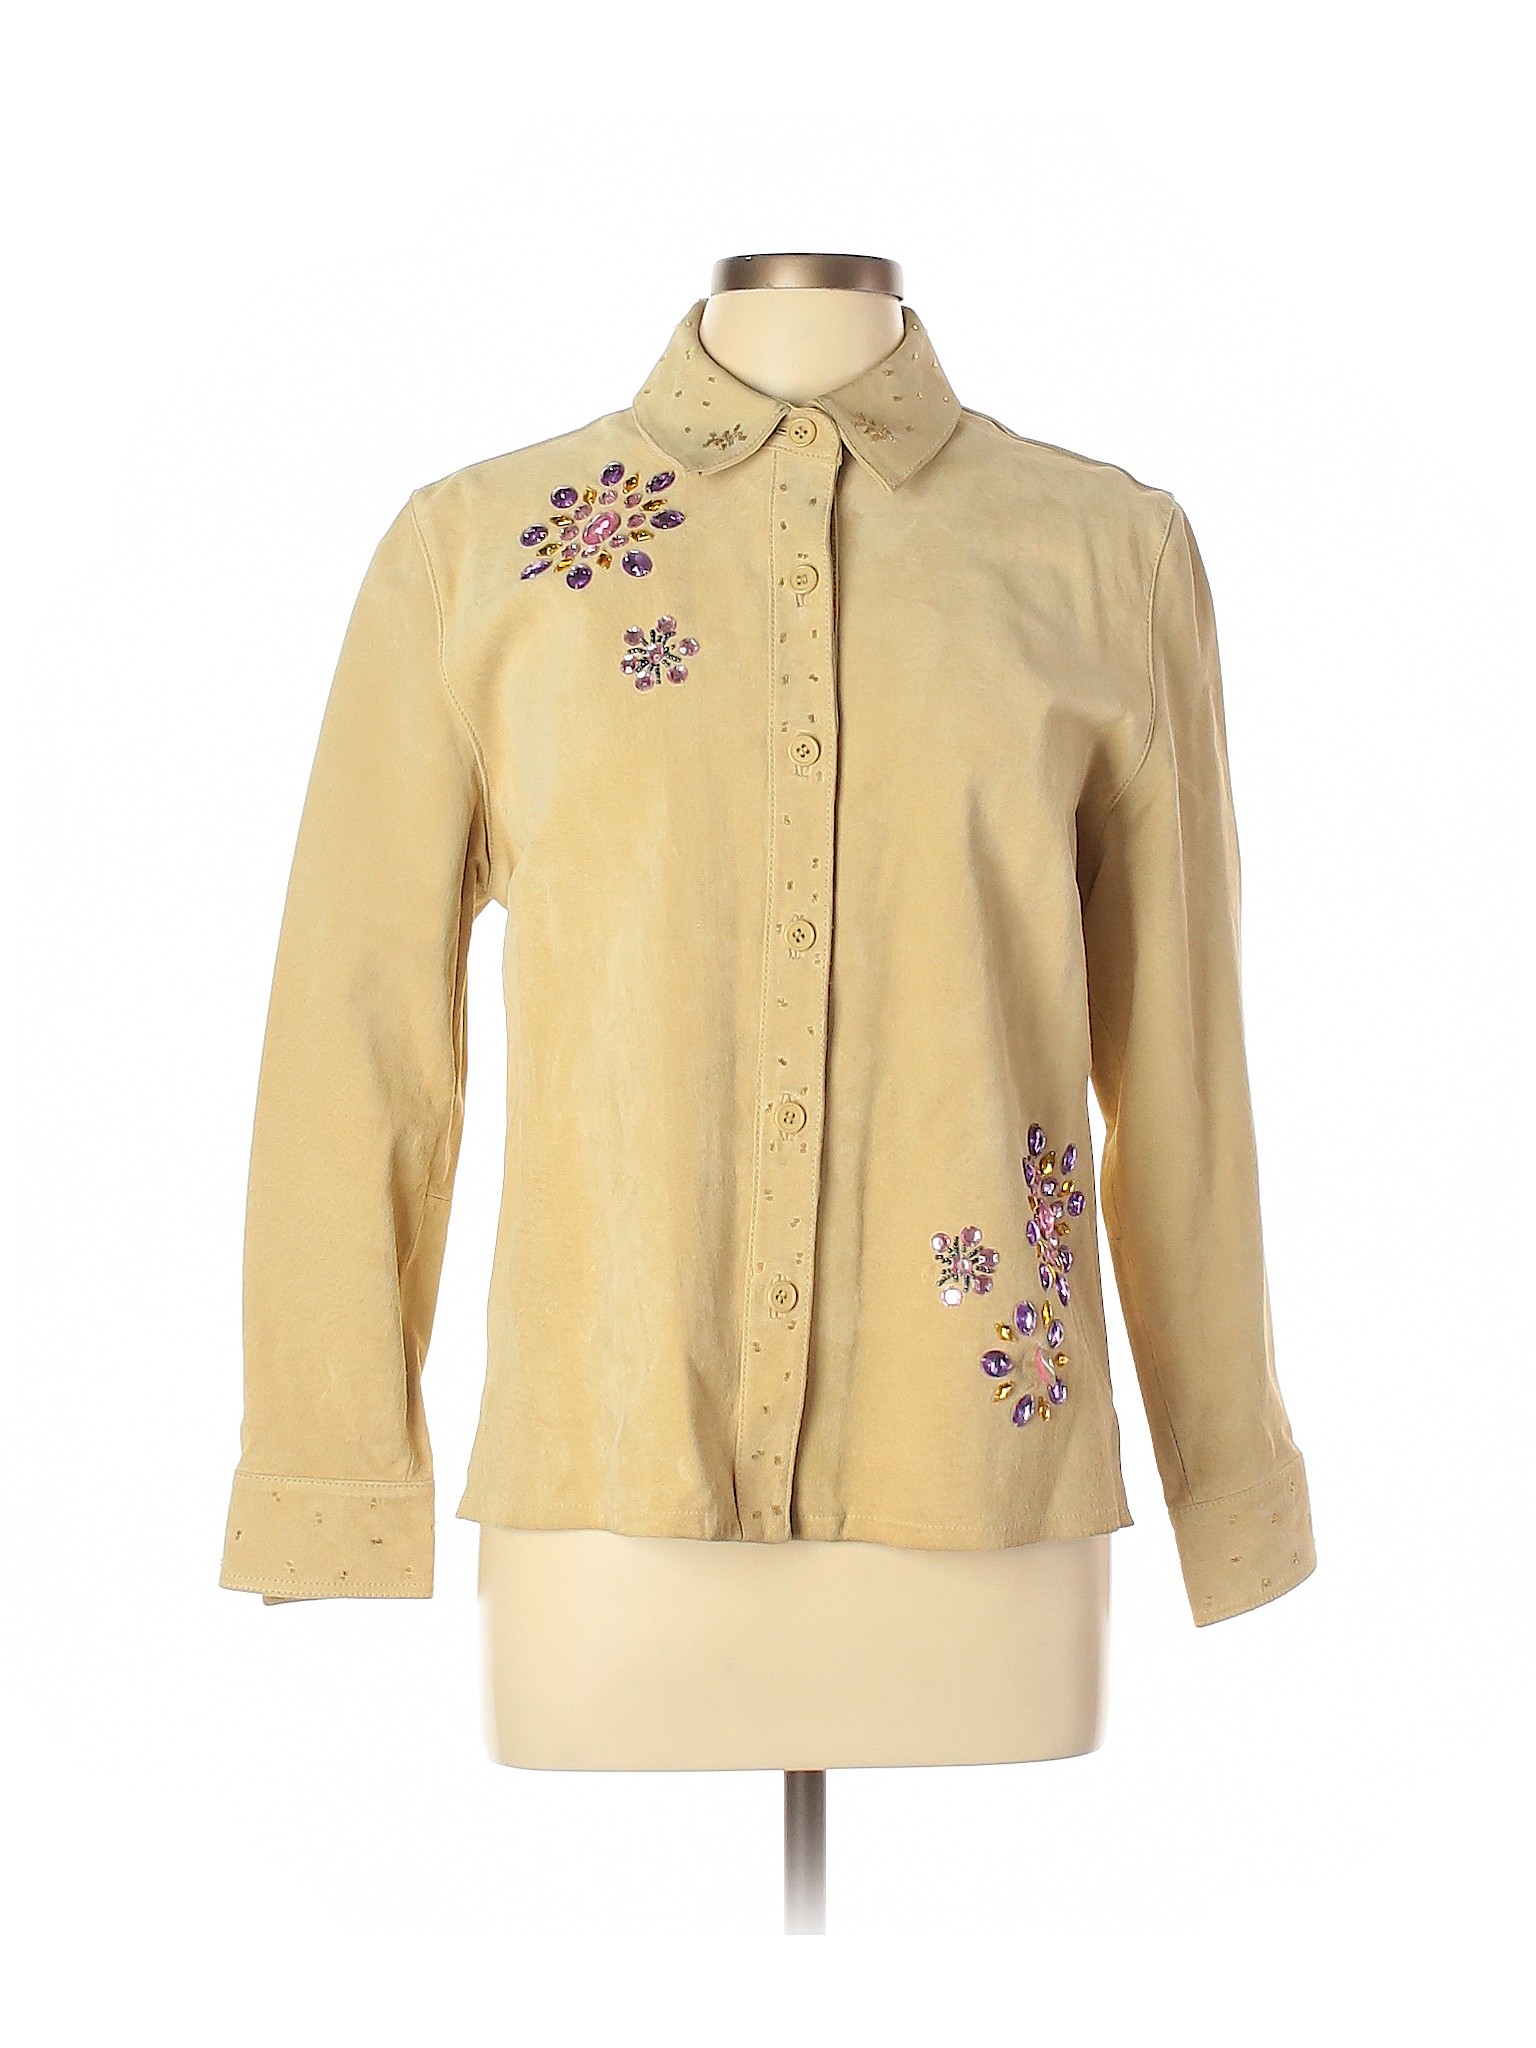 Draper's & Damon's Women Yellow Jacket L Petites | eBay